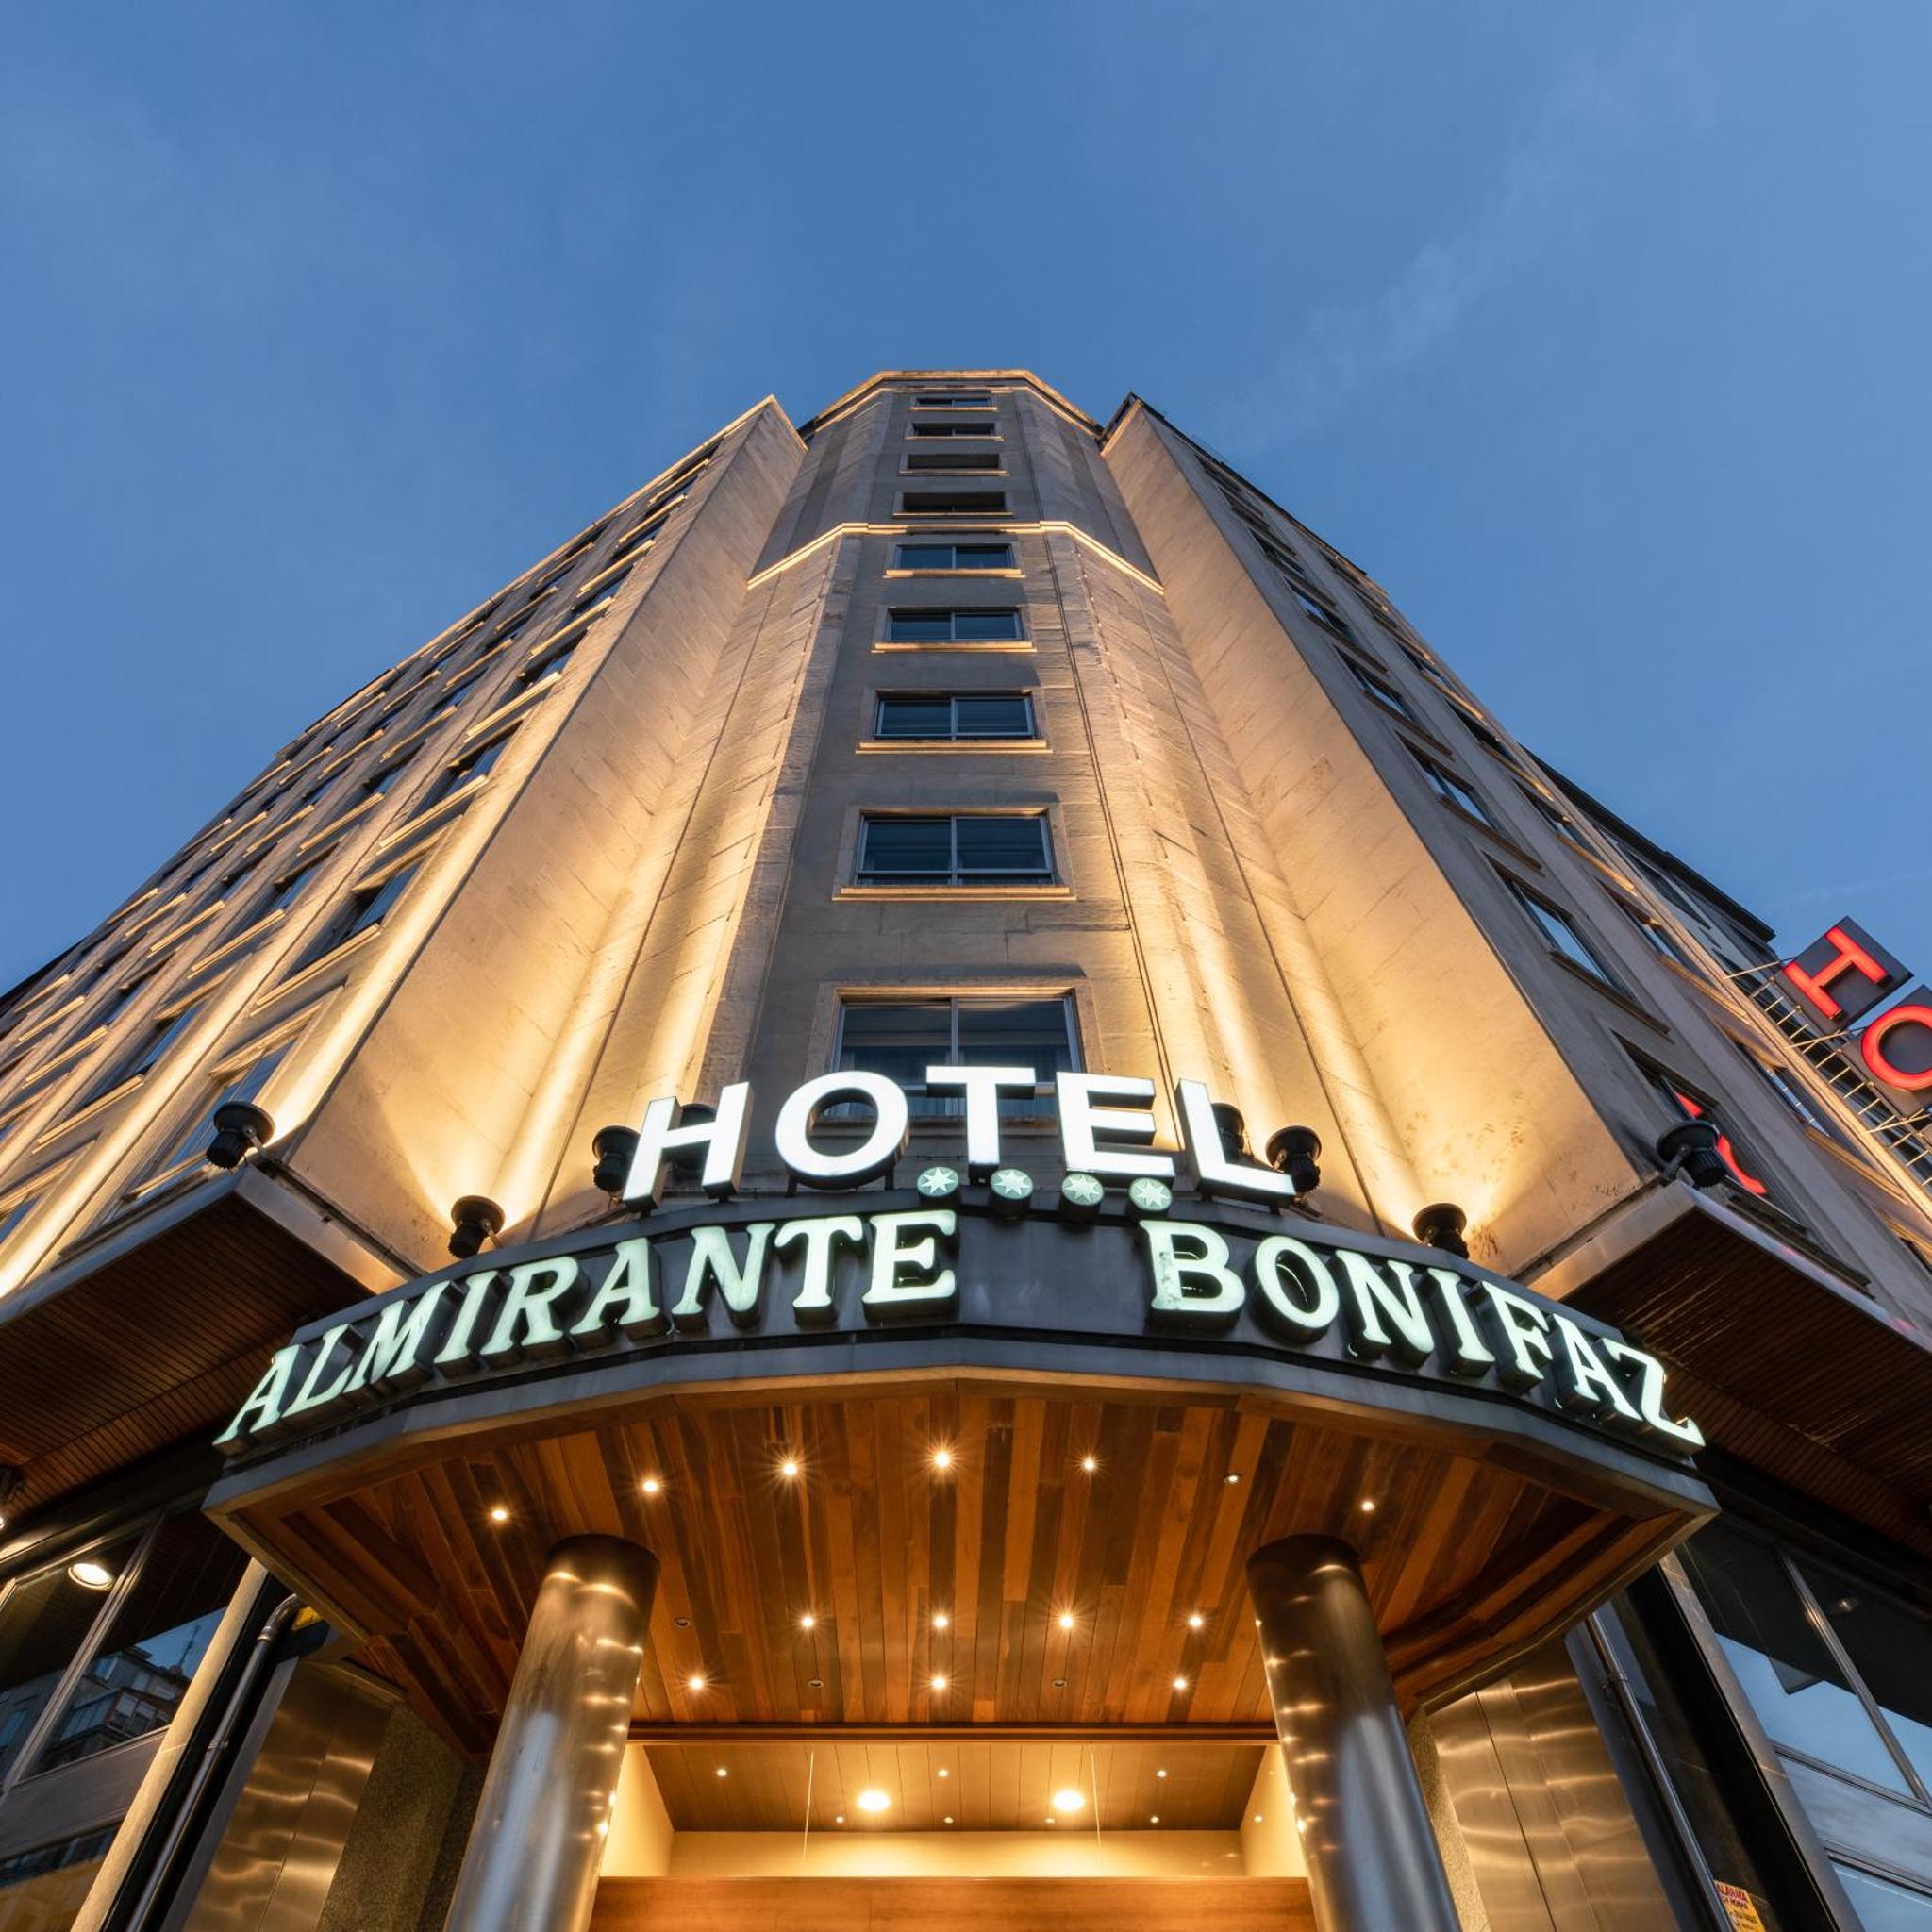 Hotel Almirante Bonifaz